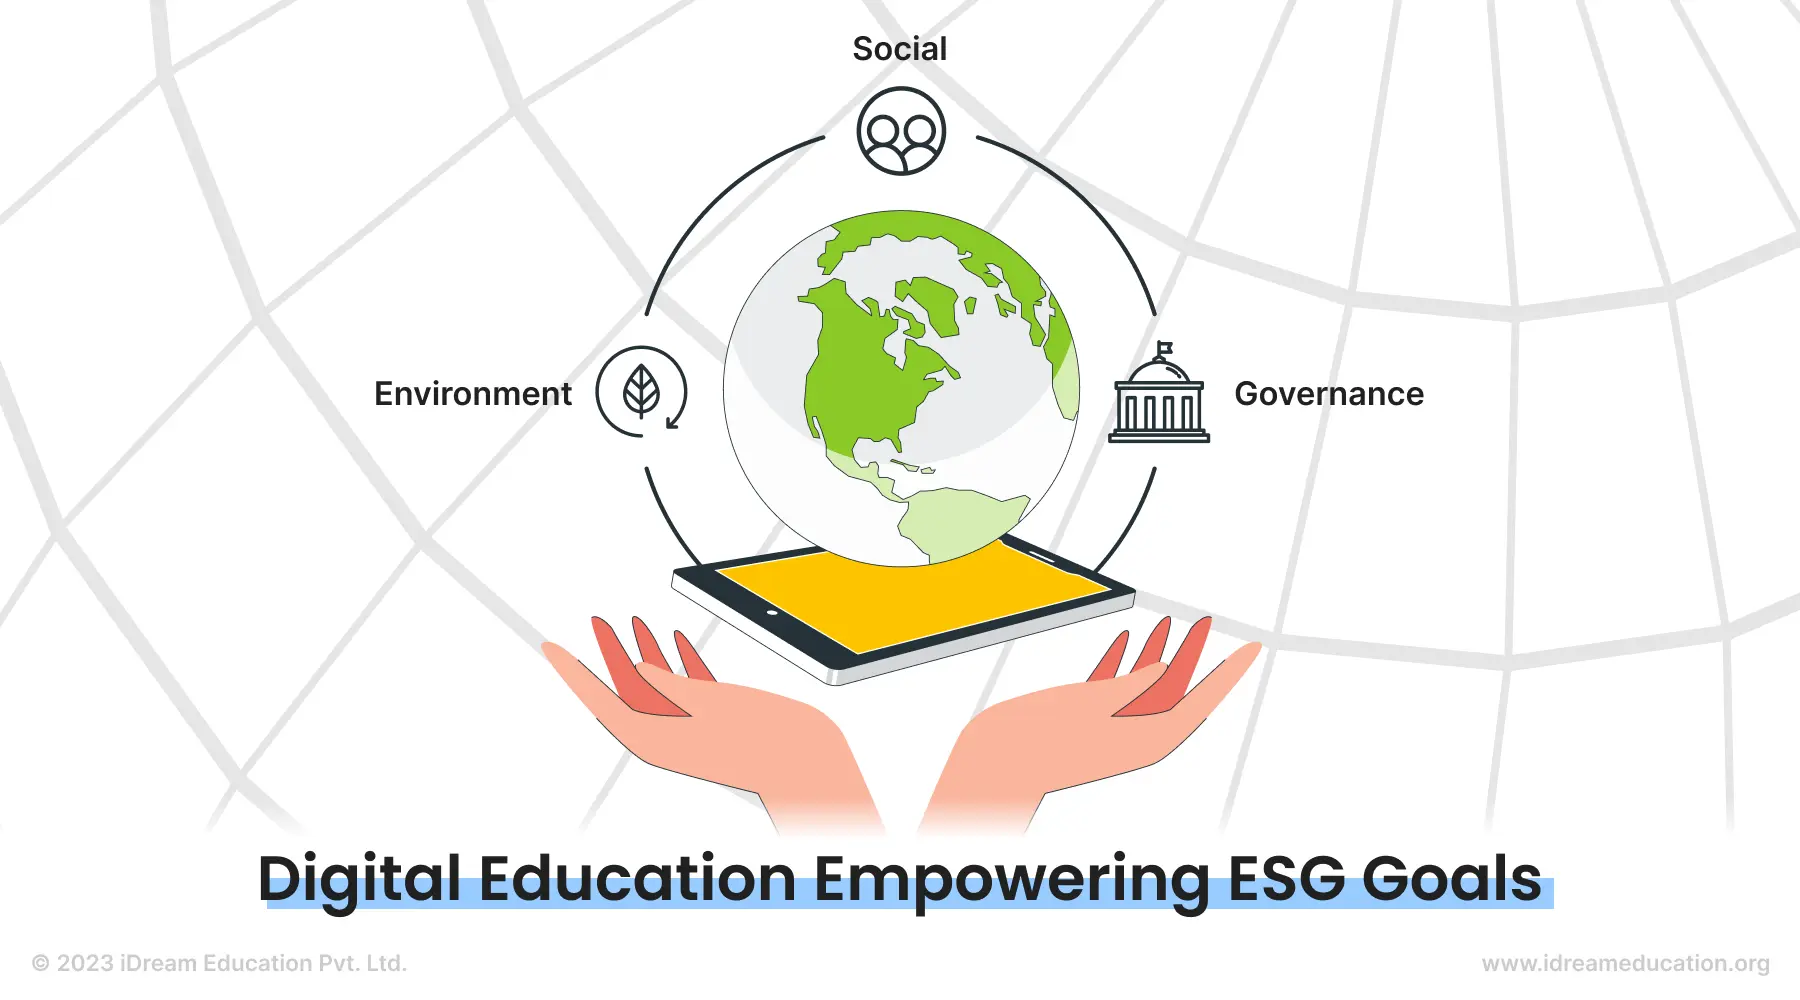 A visual representation of digital education empowering ESG goals